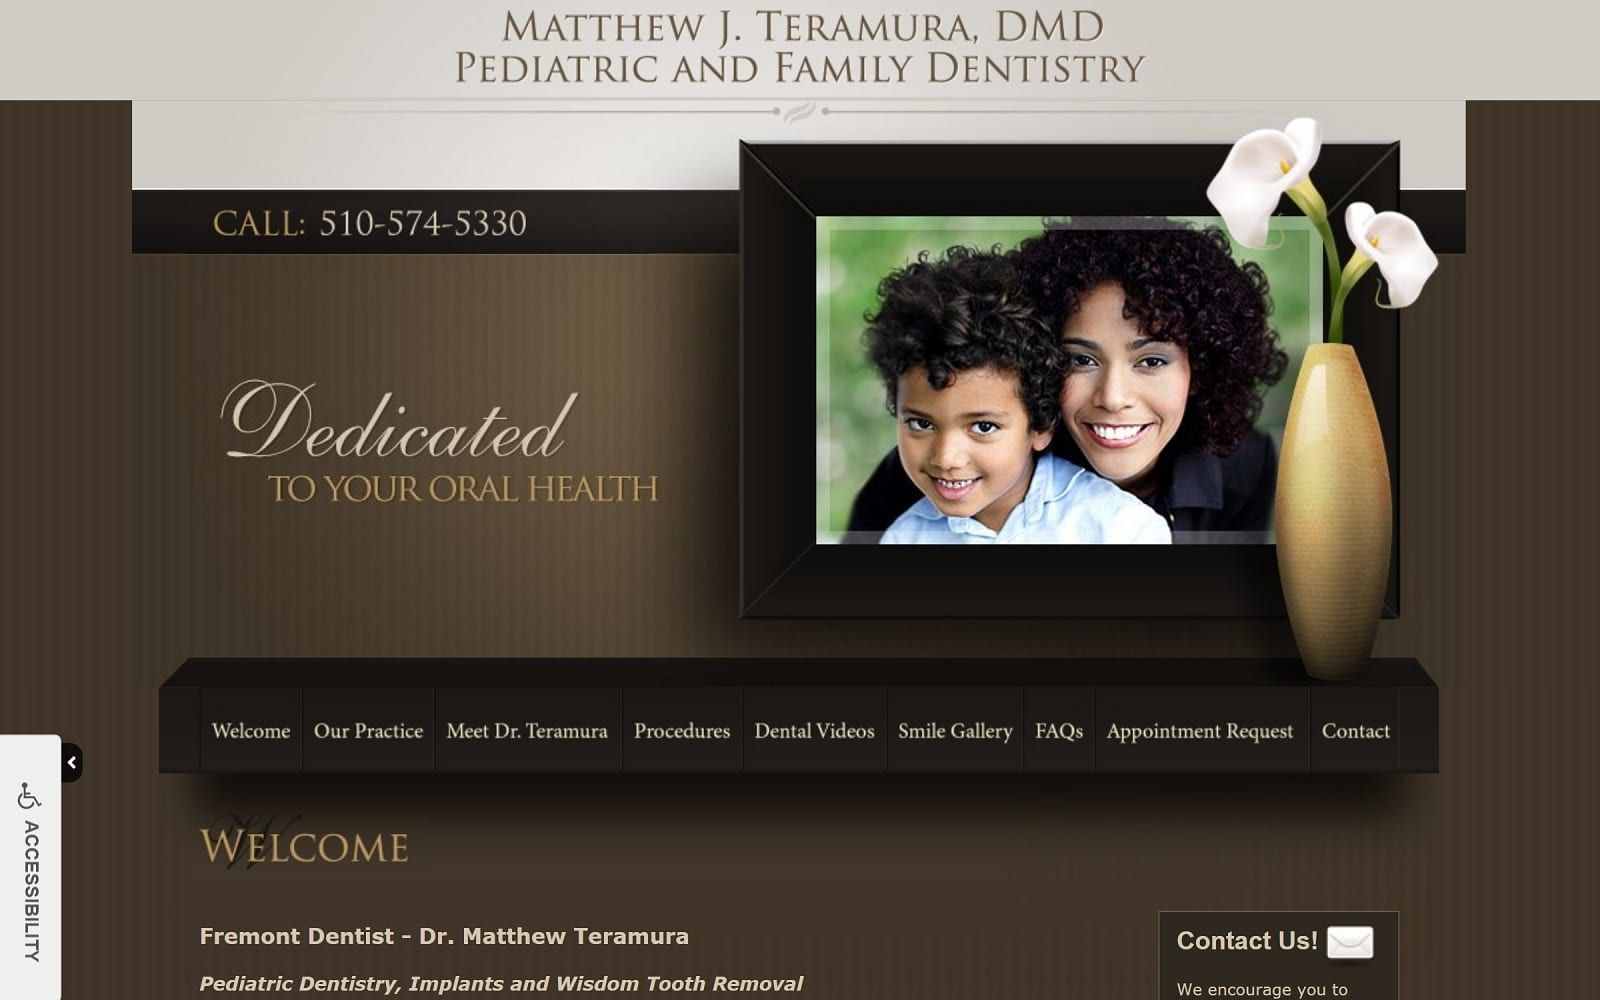 The screenshot of fremont family dentistry, matthew j teramura dmd matthewteramuradmd. Com website